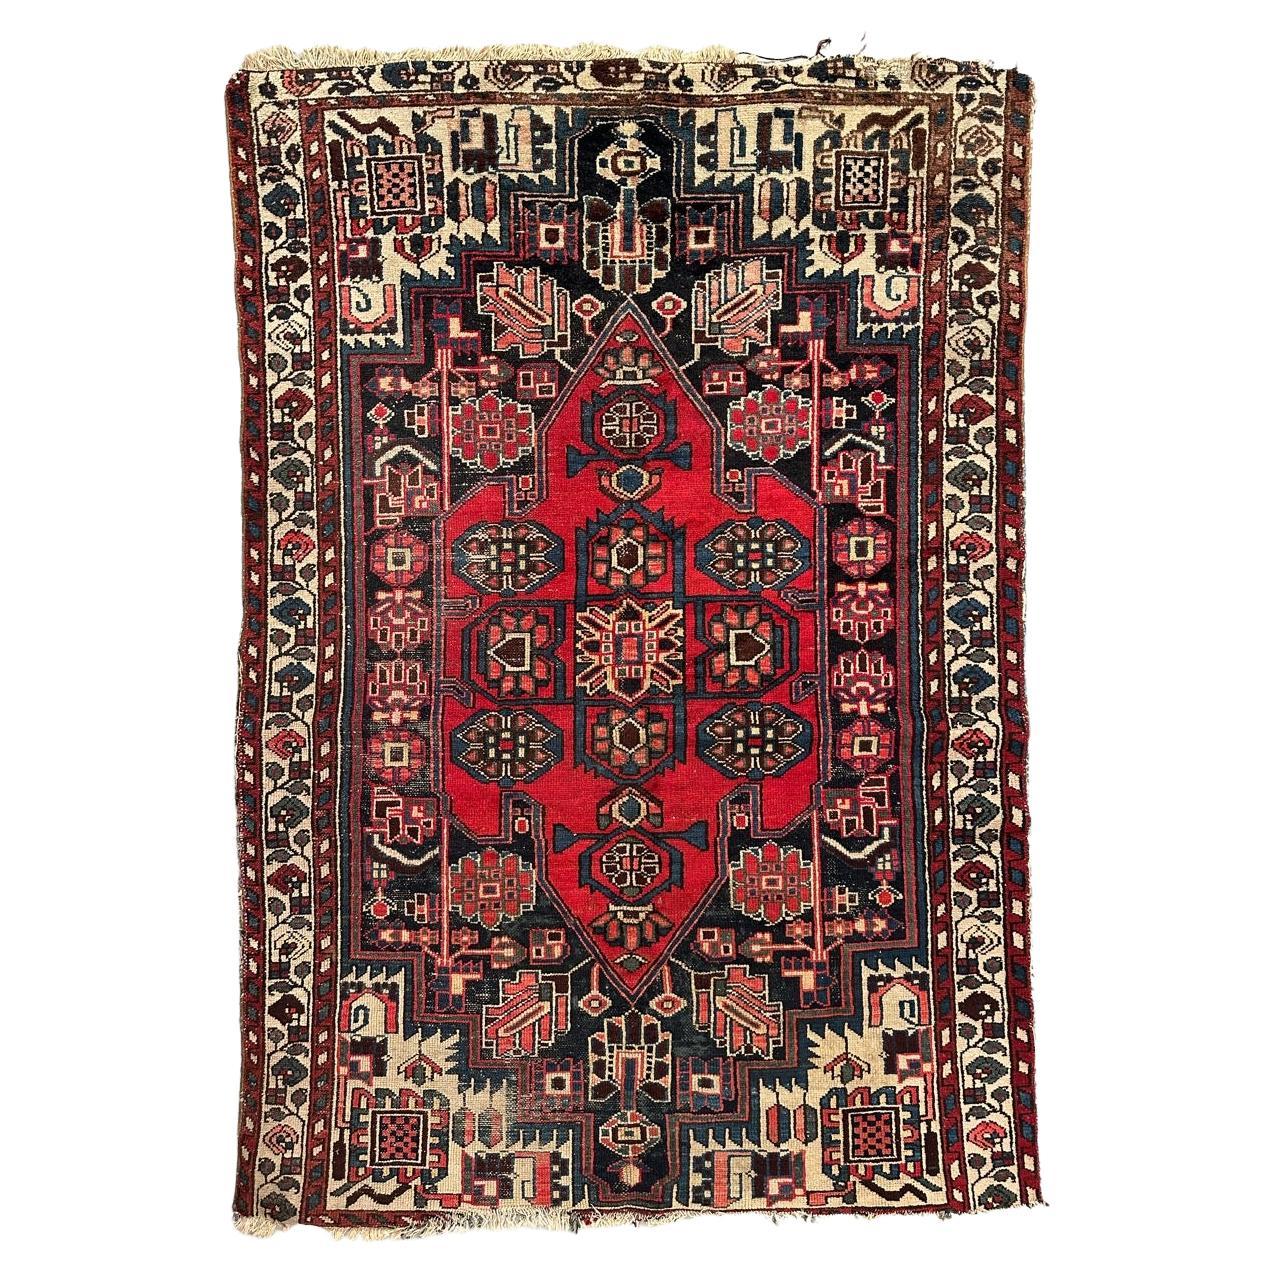 Bobyrug's Nice vintage distressed Hamadan rug